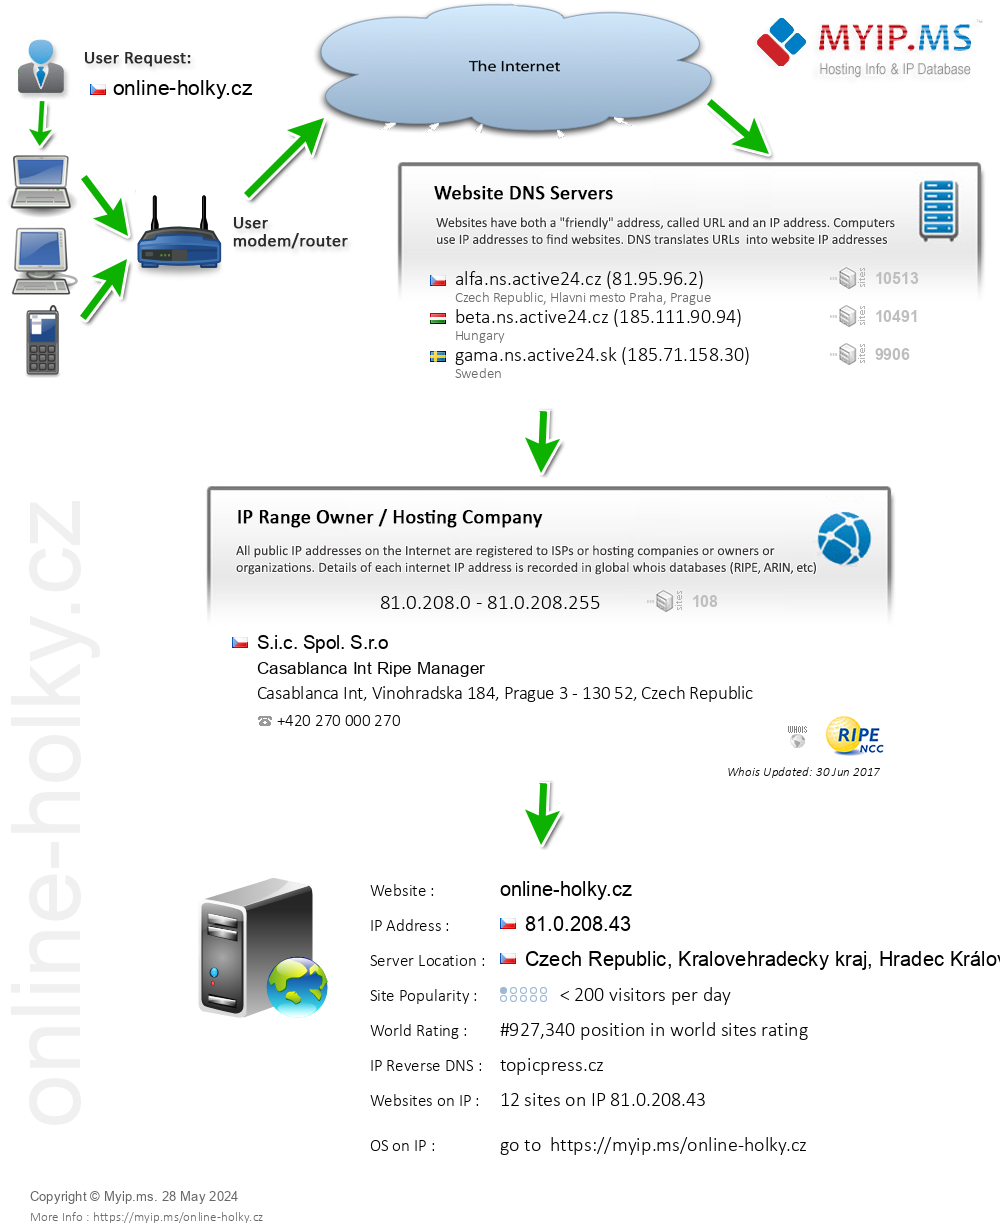 Online-holky.cz - Website Hosting Visual IP Diagram